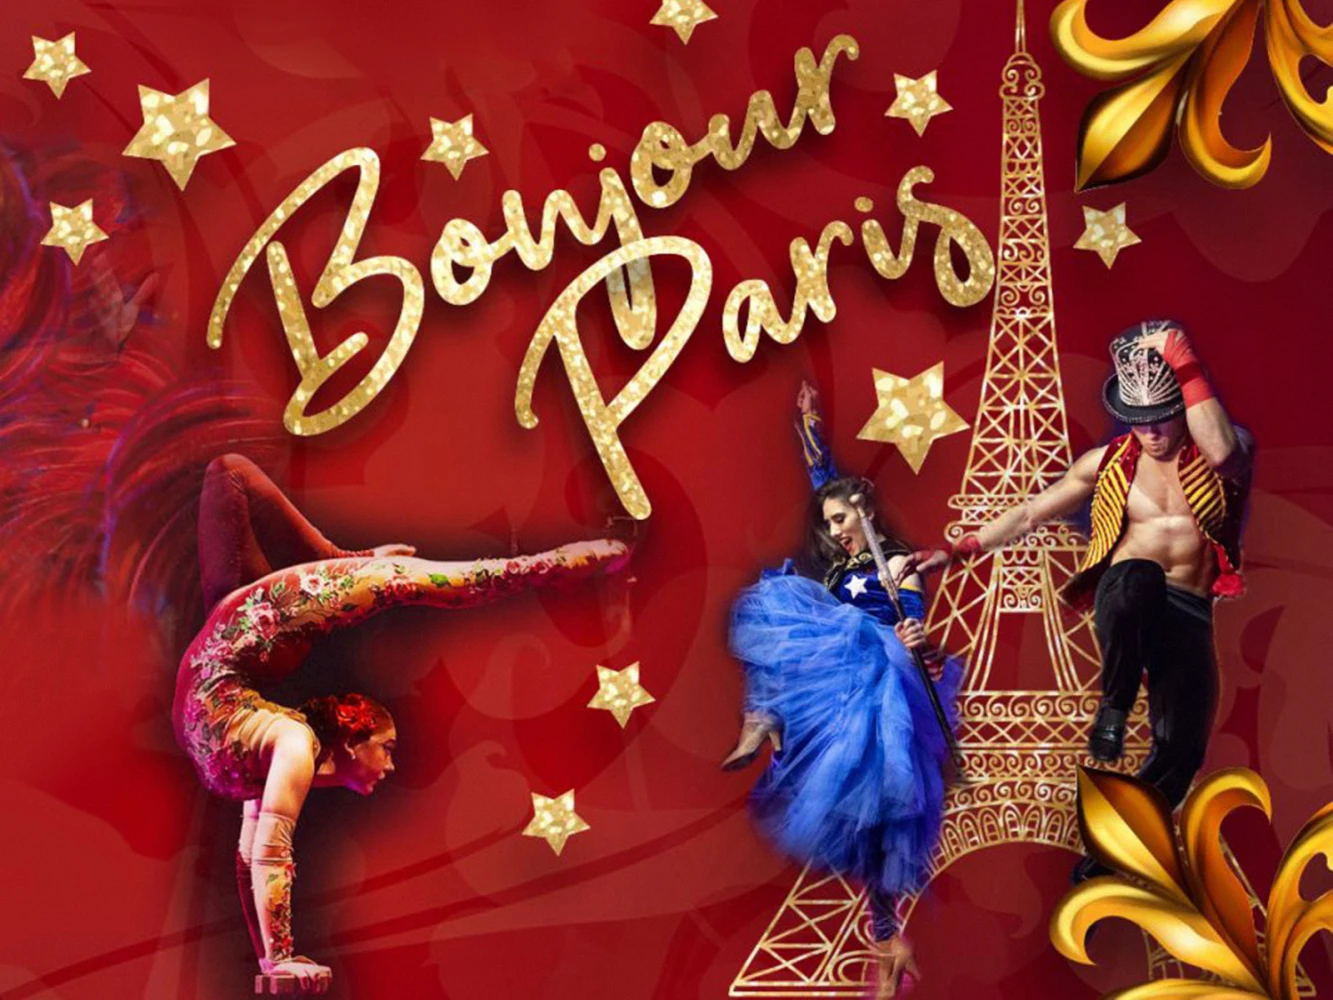 Circus Vargas: Bonjour Paris!: What to expect - 4